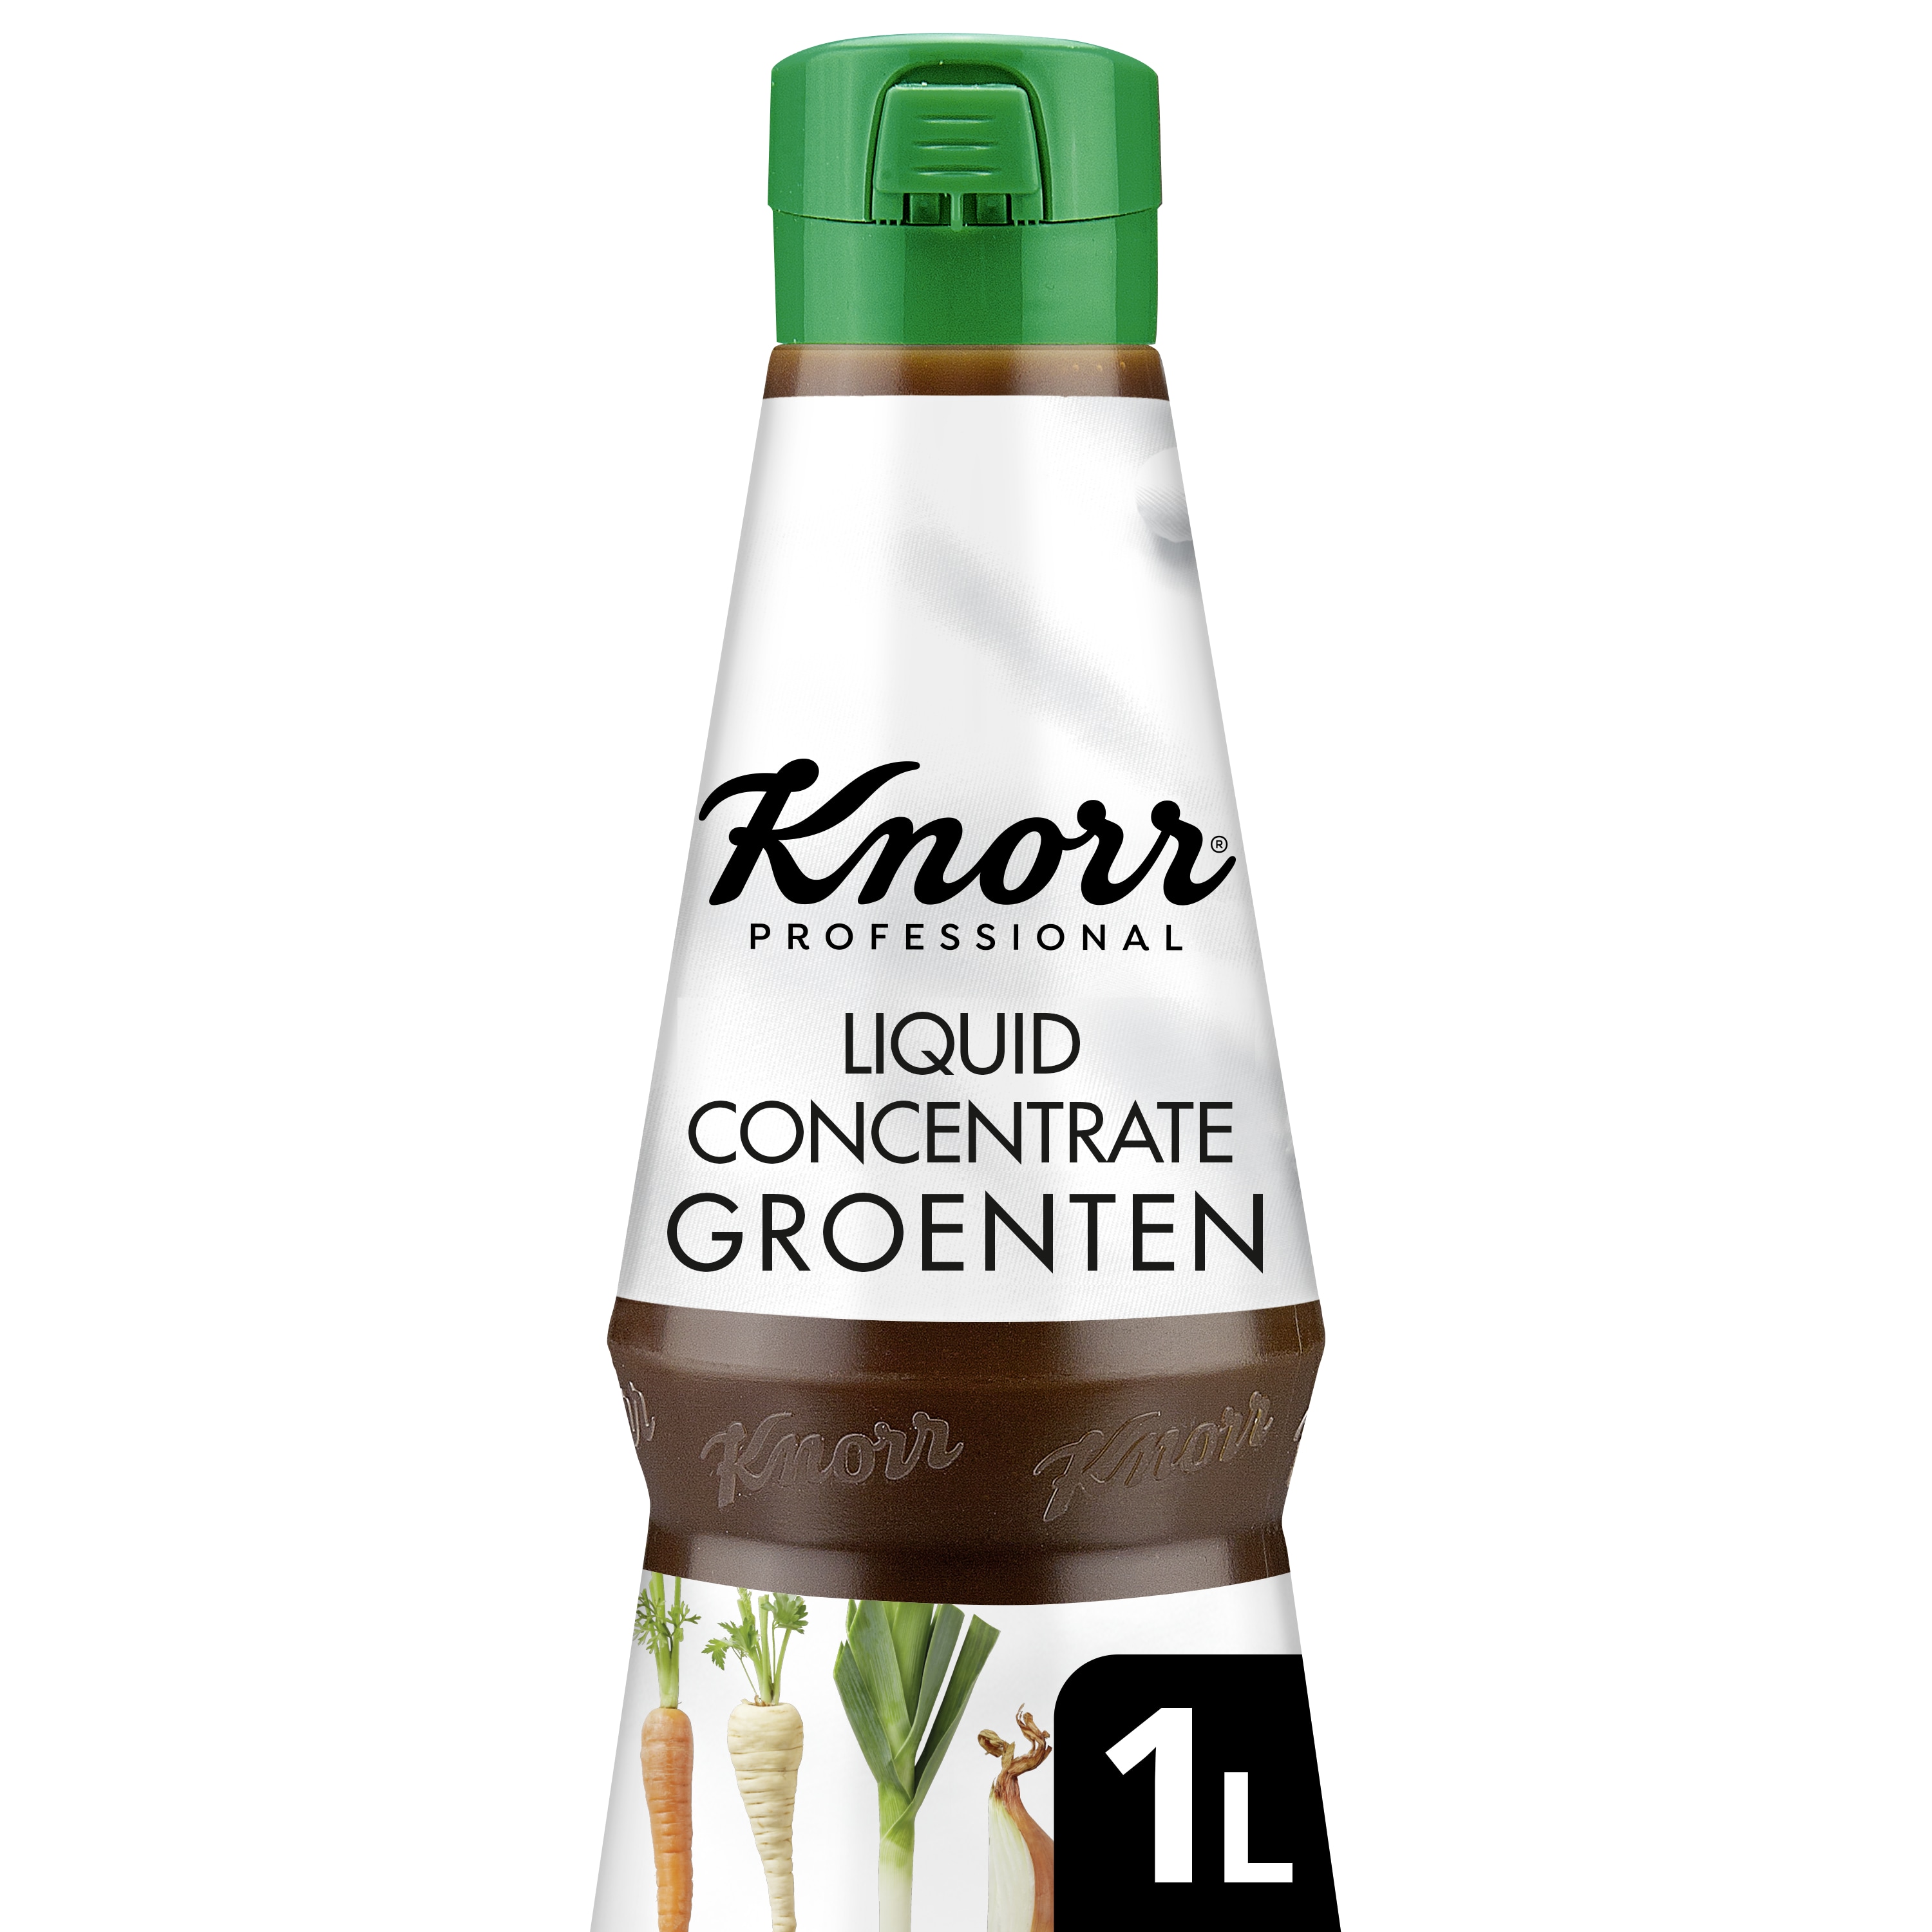 Knorr Professional Liquid Concentrate Groenten 1L